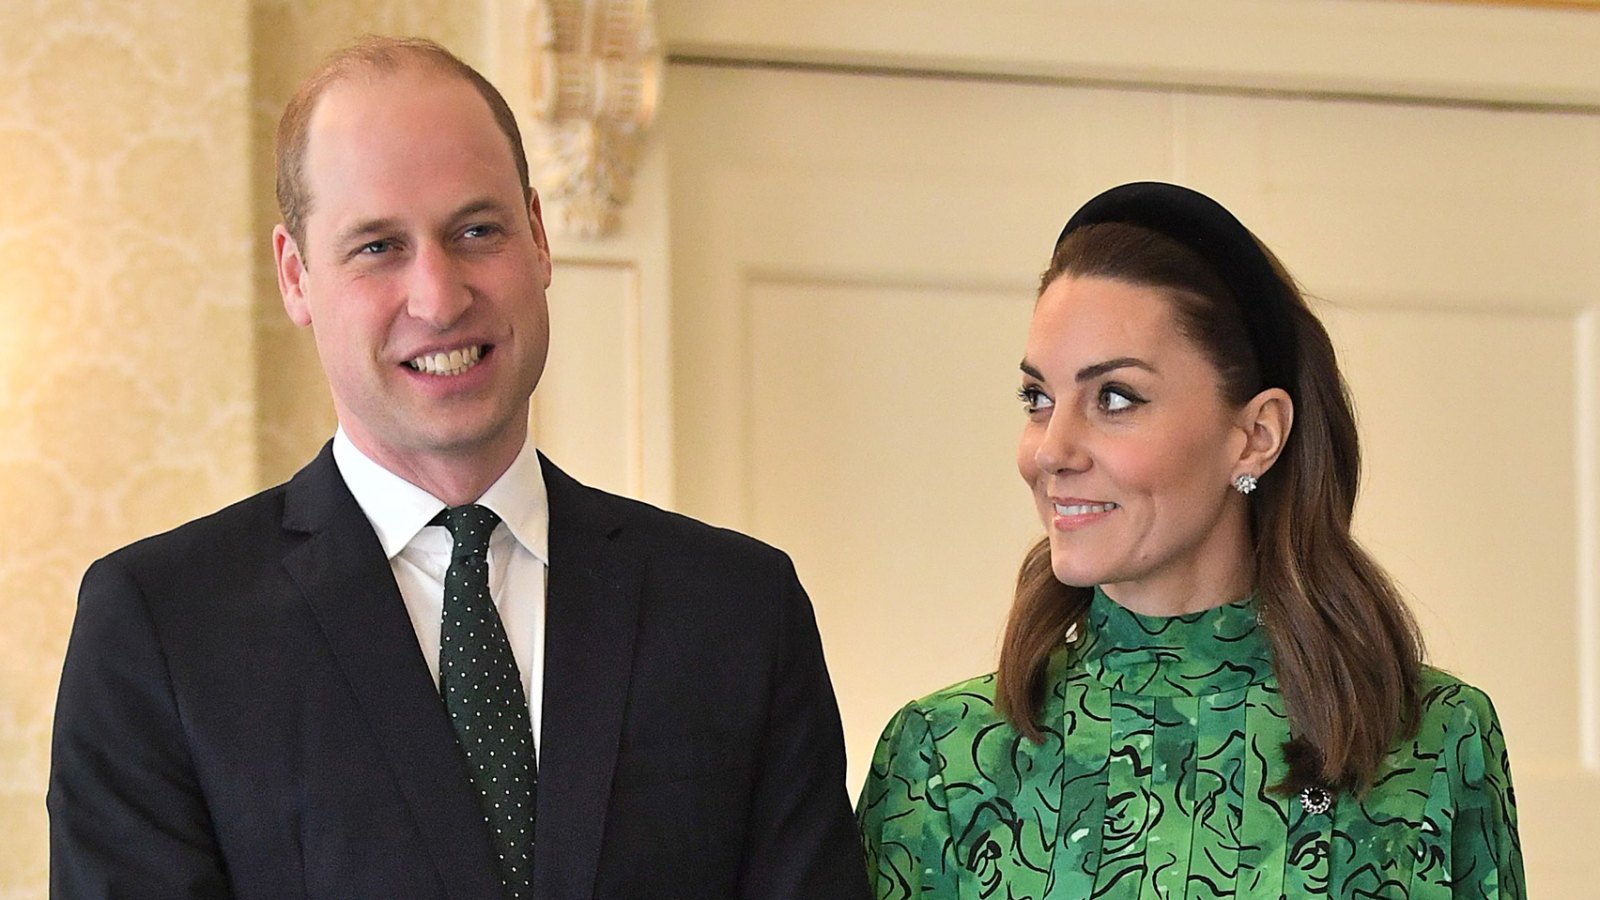 Prince William Jokes That He and Duchess Kate Are 'Spreading' Coronavirus While on Ireland Tour